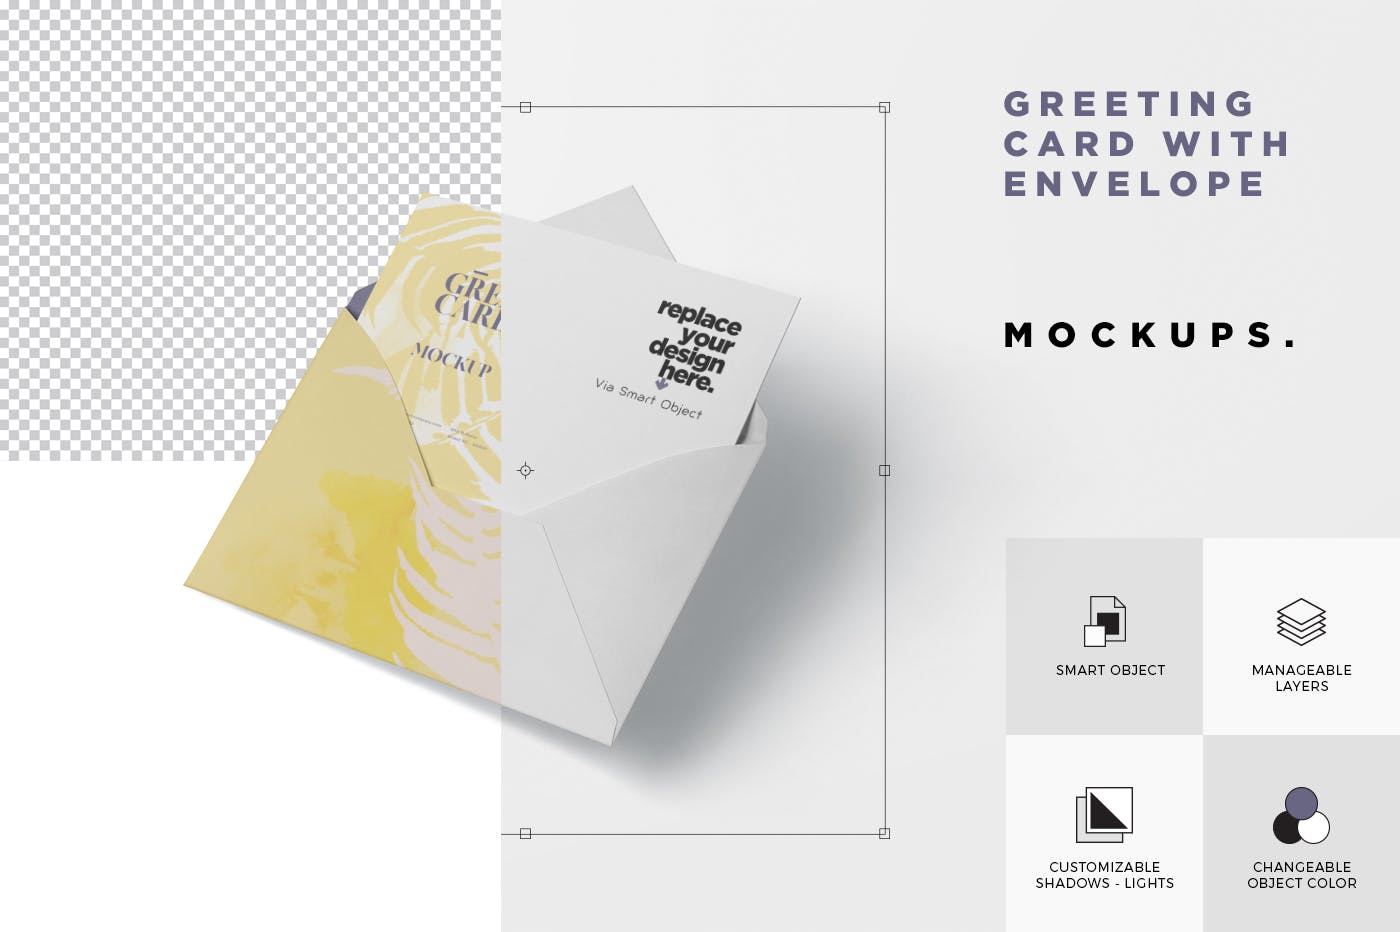 高端企业信封&贺卡设计图16设计网精选 Greeting Card Mockup with Envelope – A6 Size插图(5)